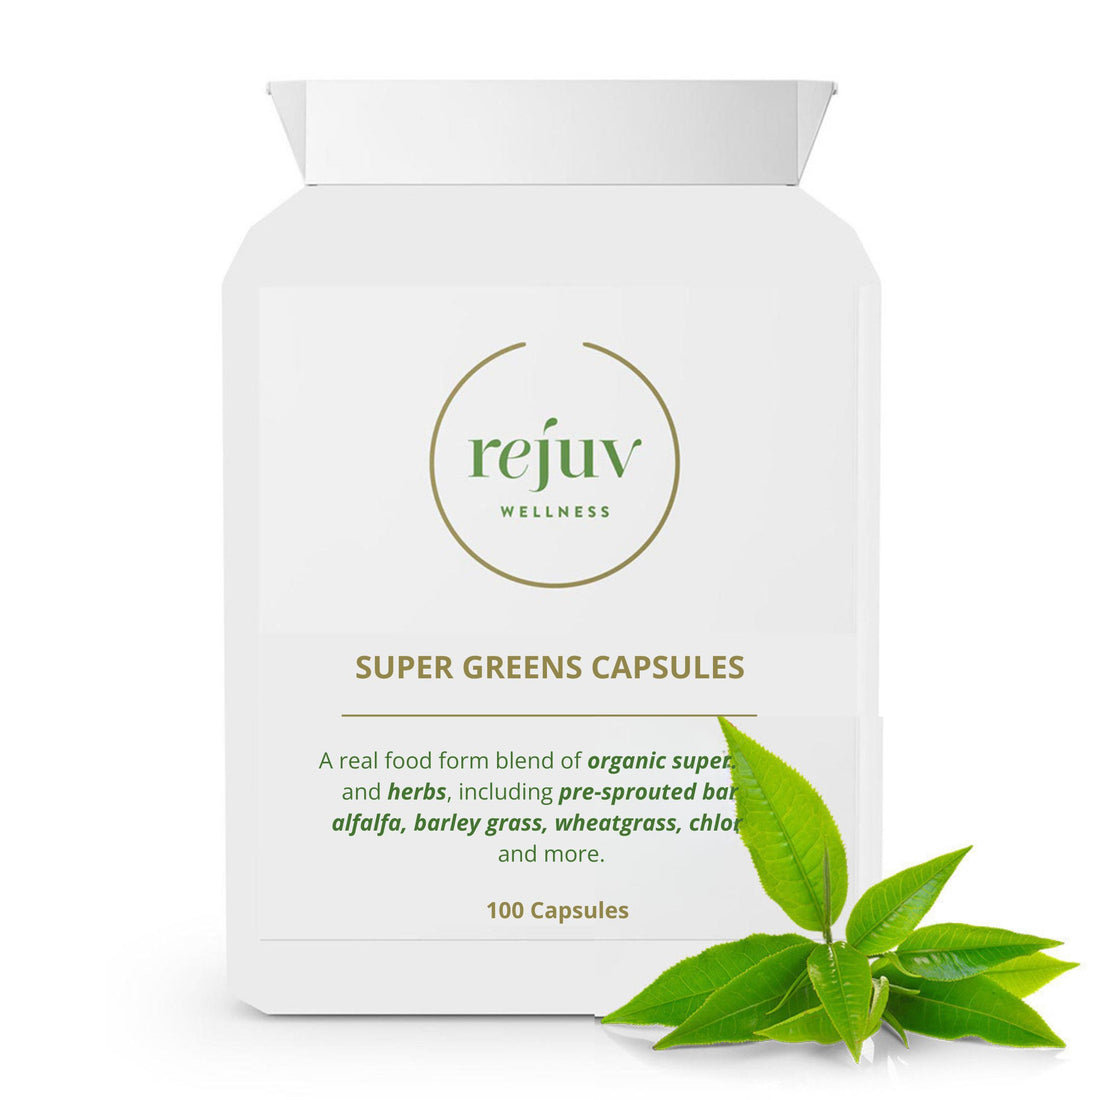 Super Greens Capsules - New Formula